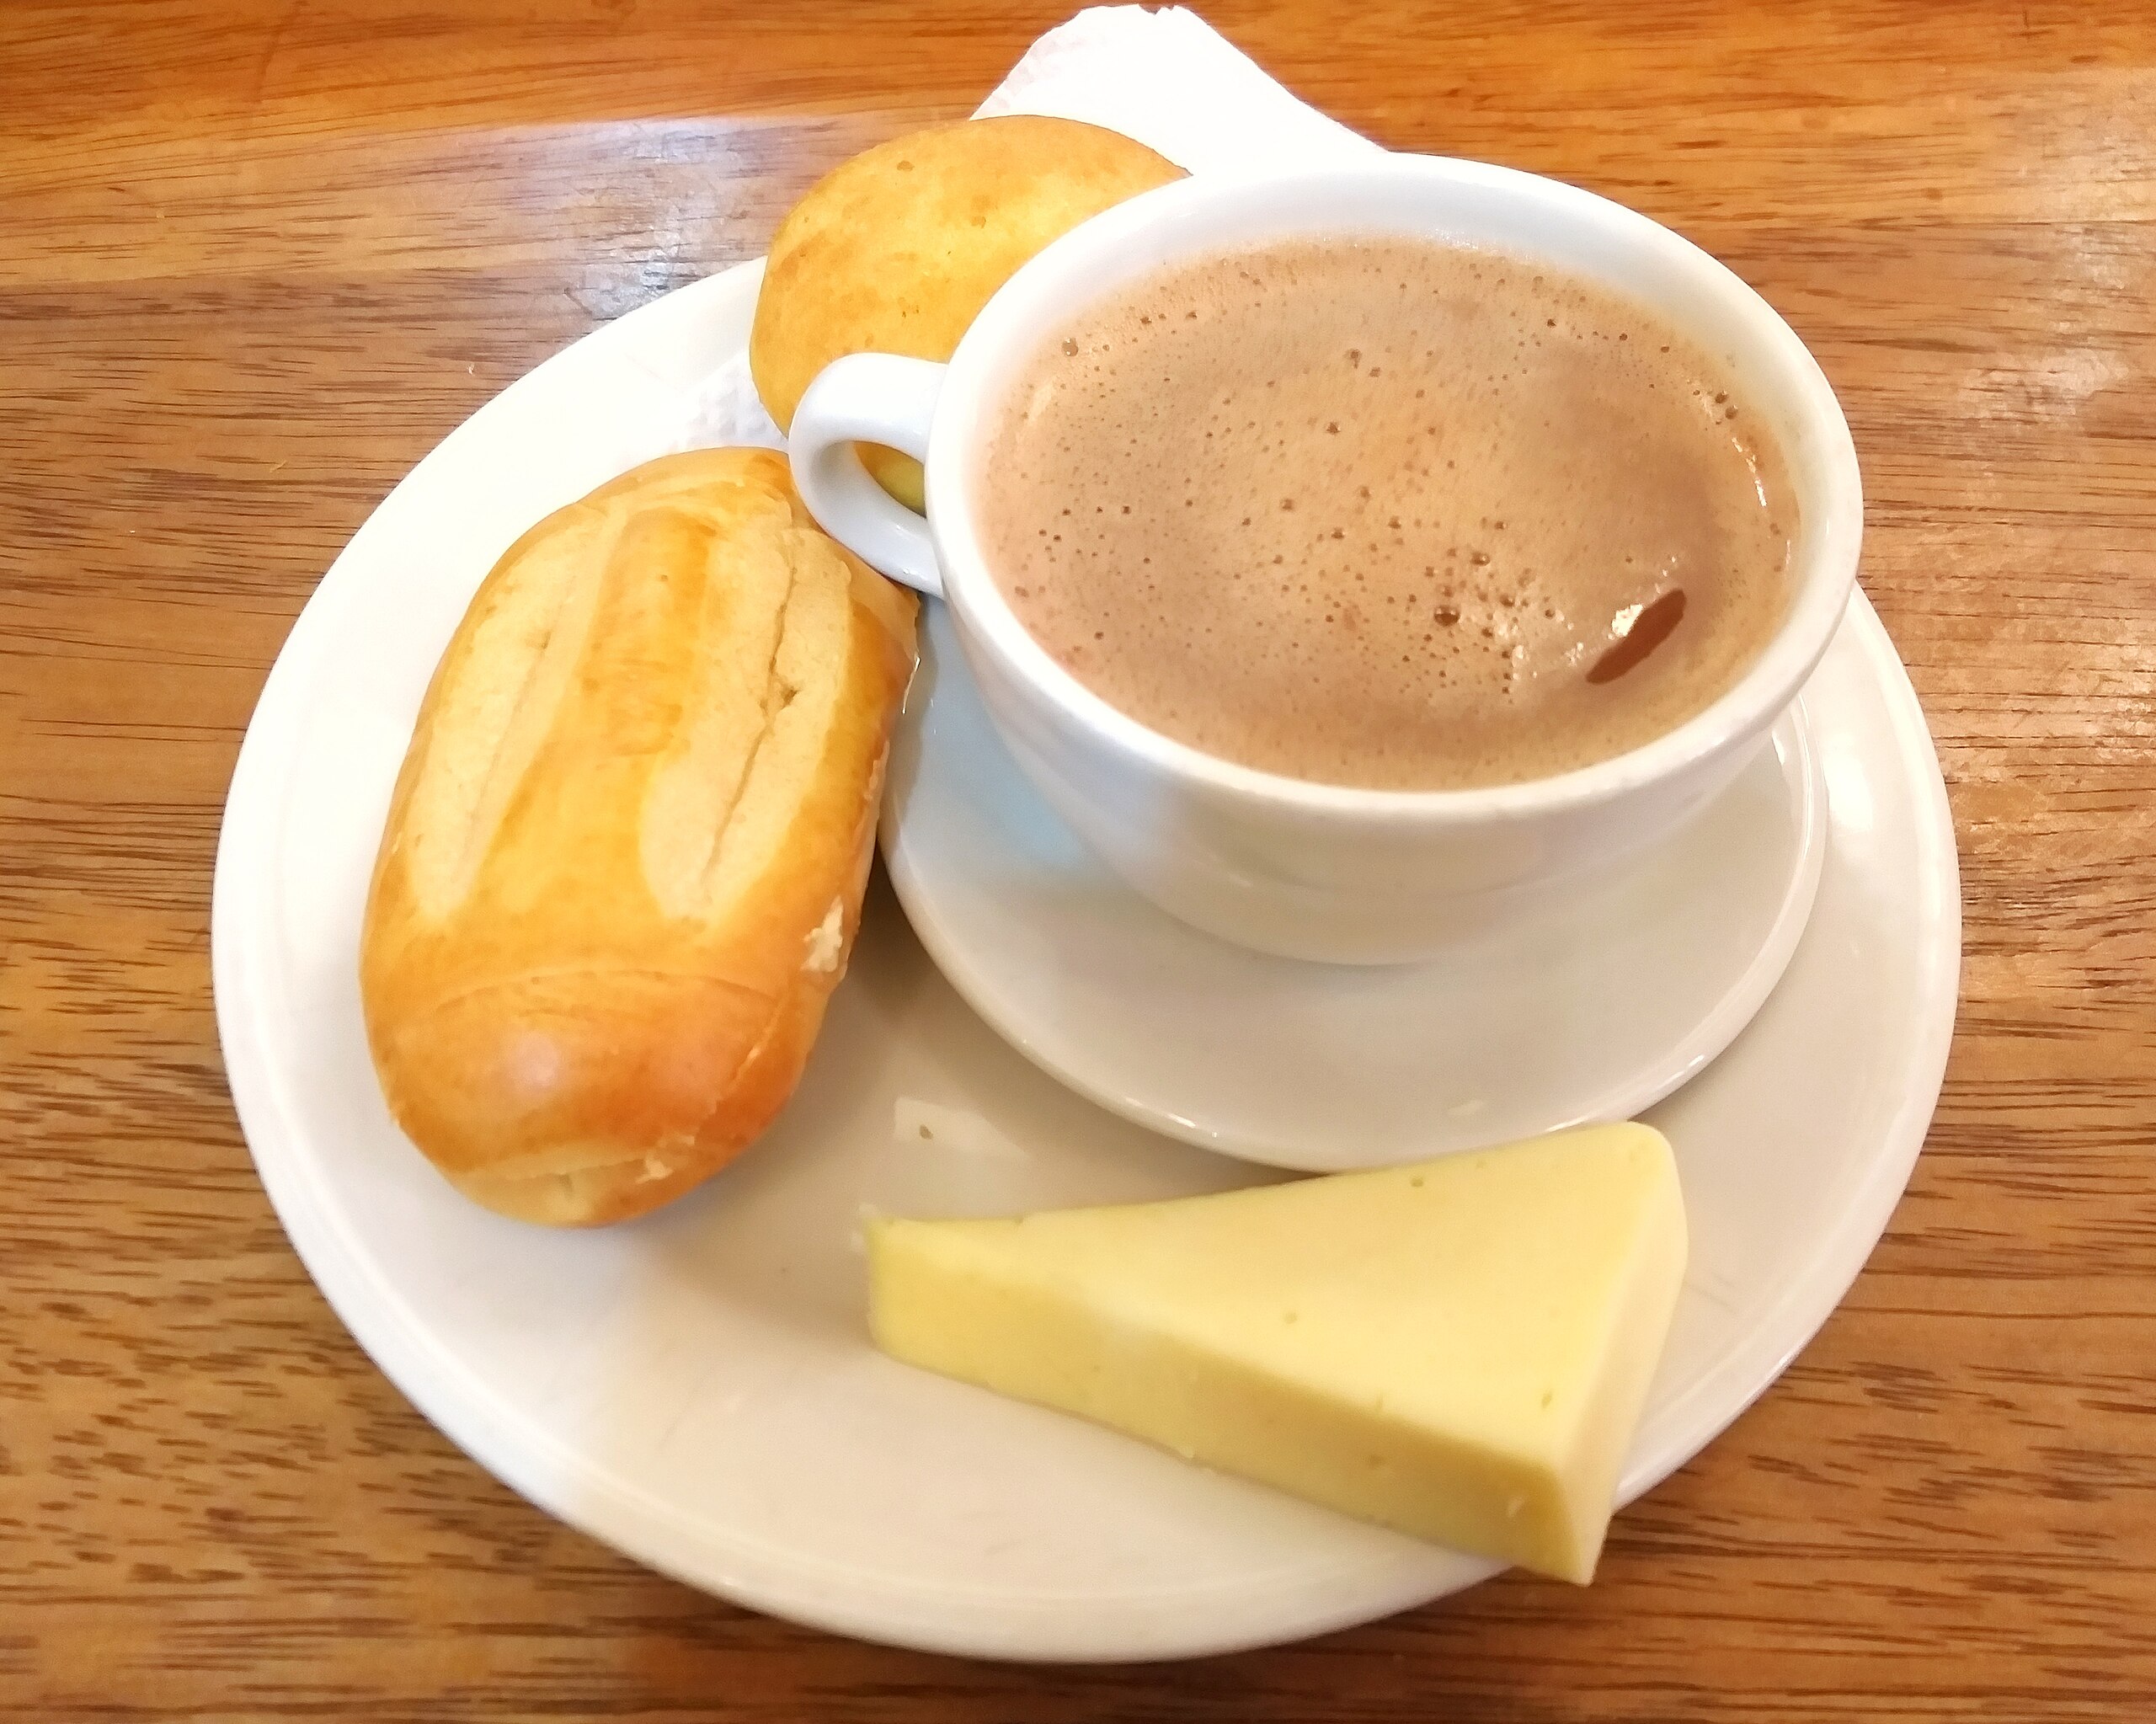 File:Chocolate caliente con queso 1.jpg - Wikimedia Commons